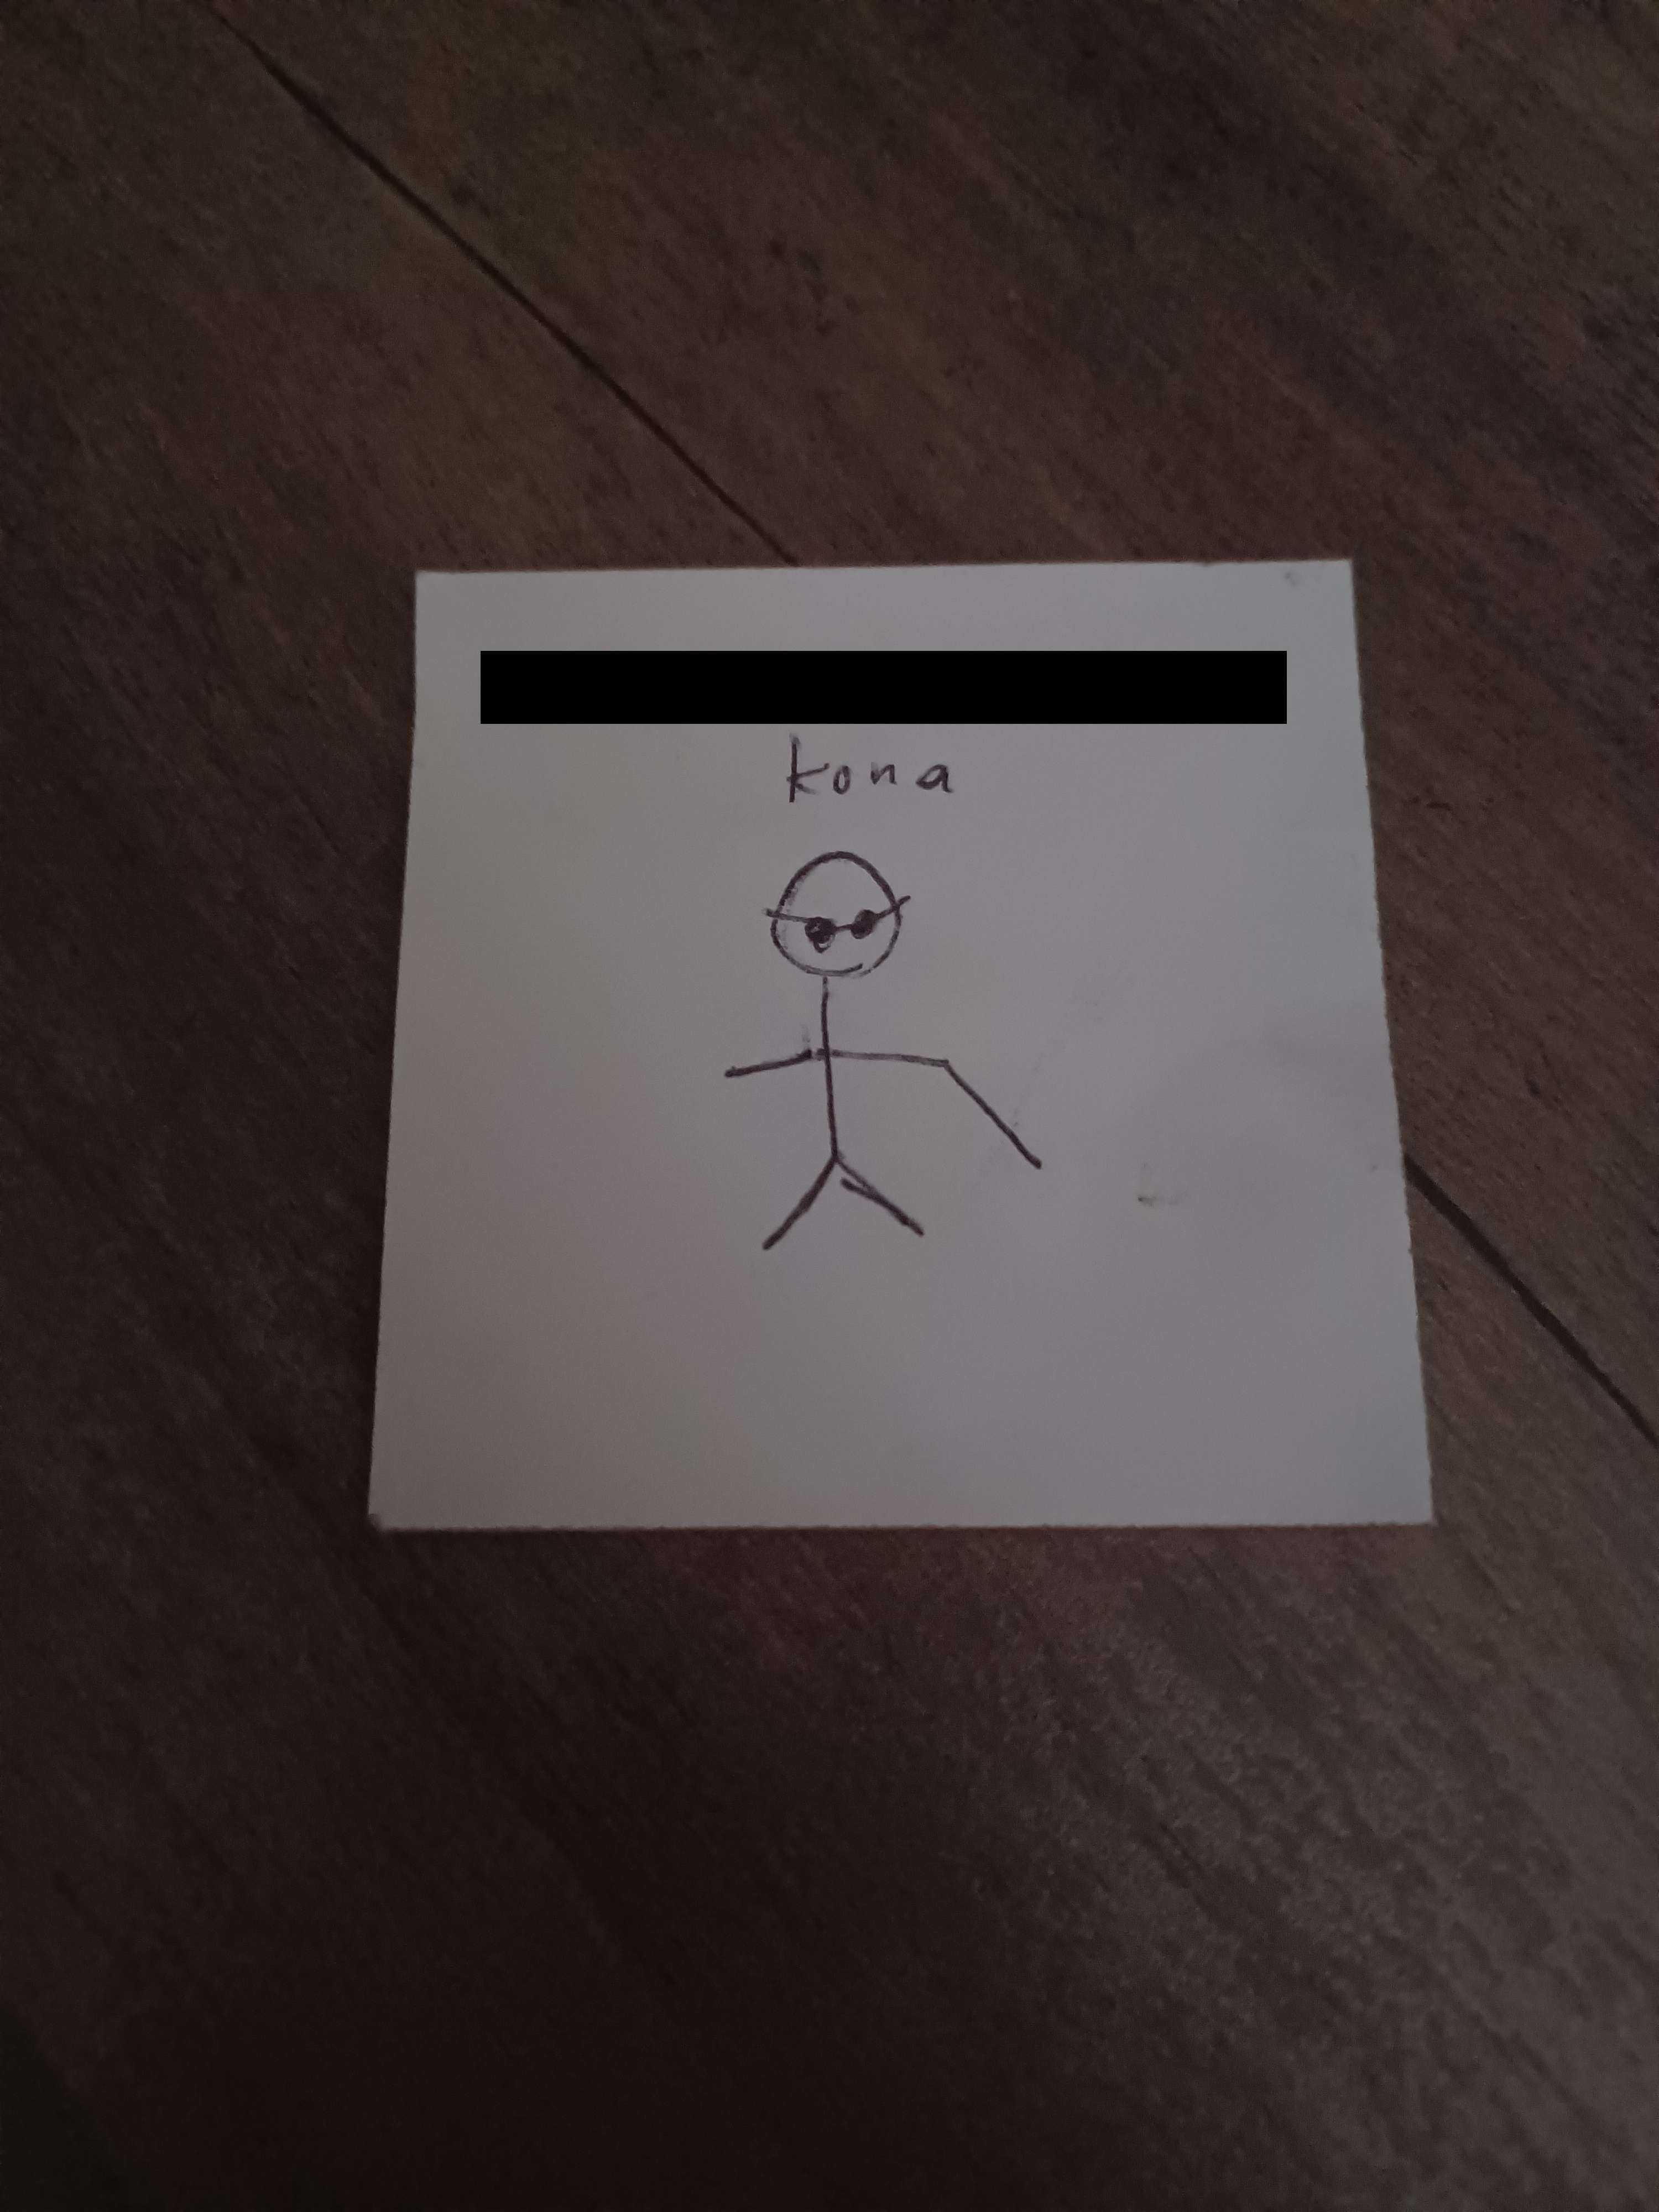 Kona drawn on a note